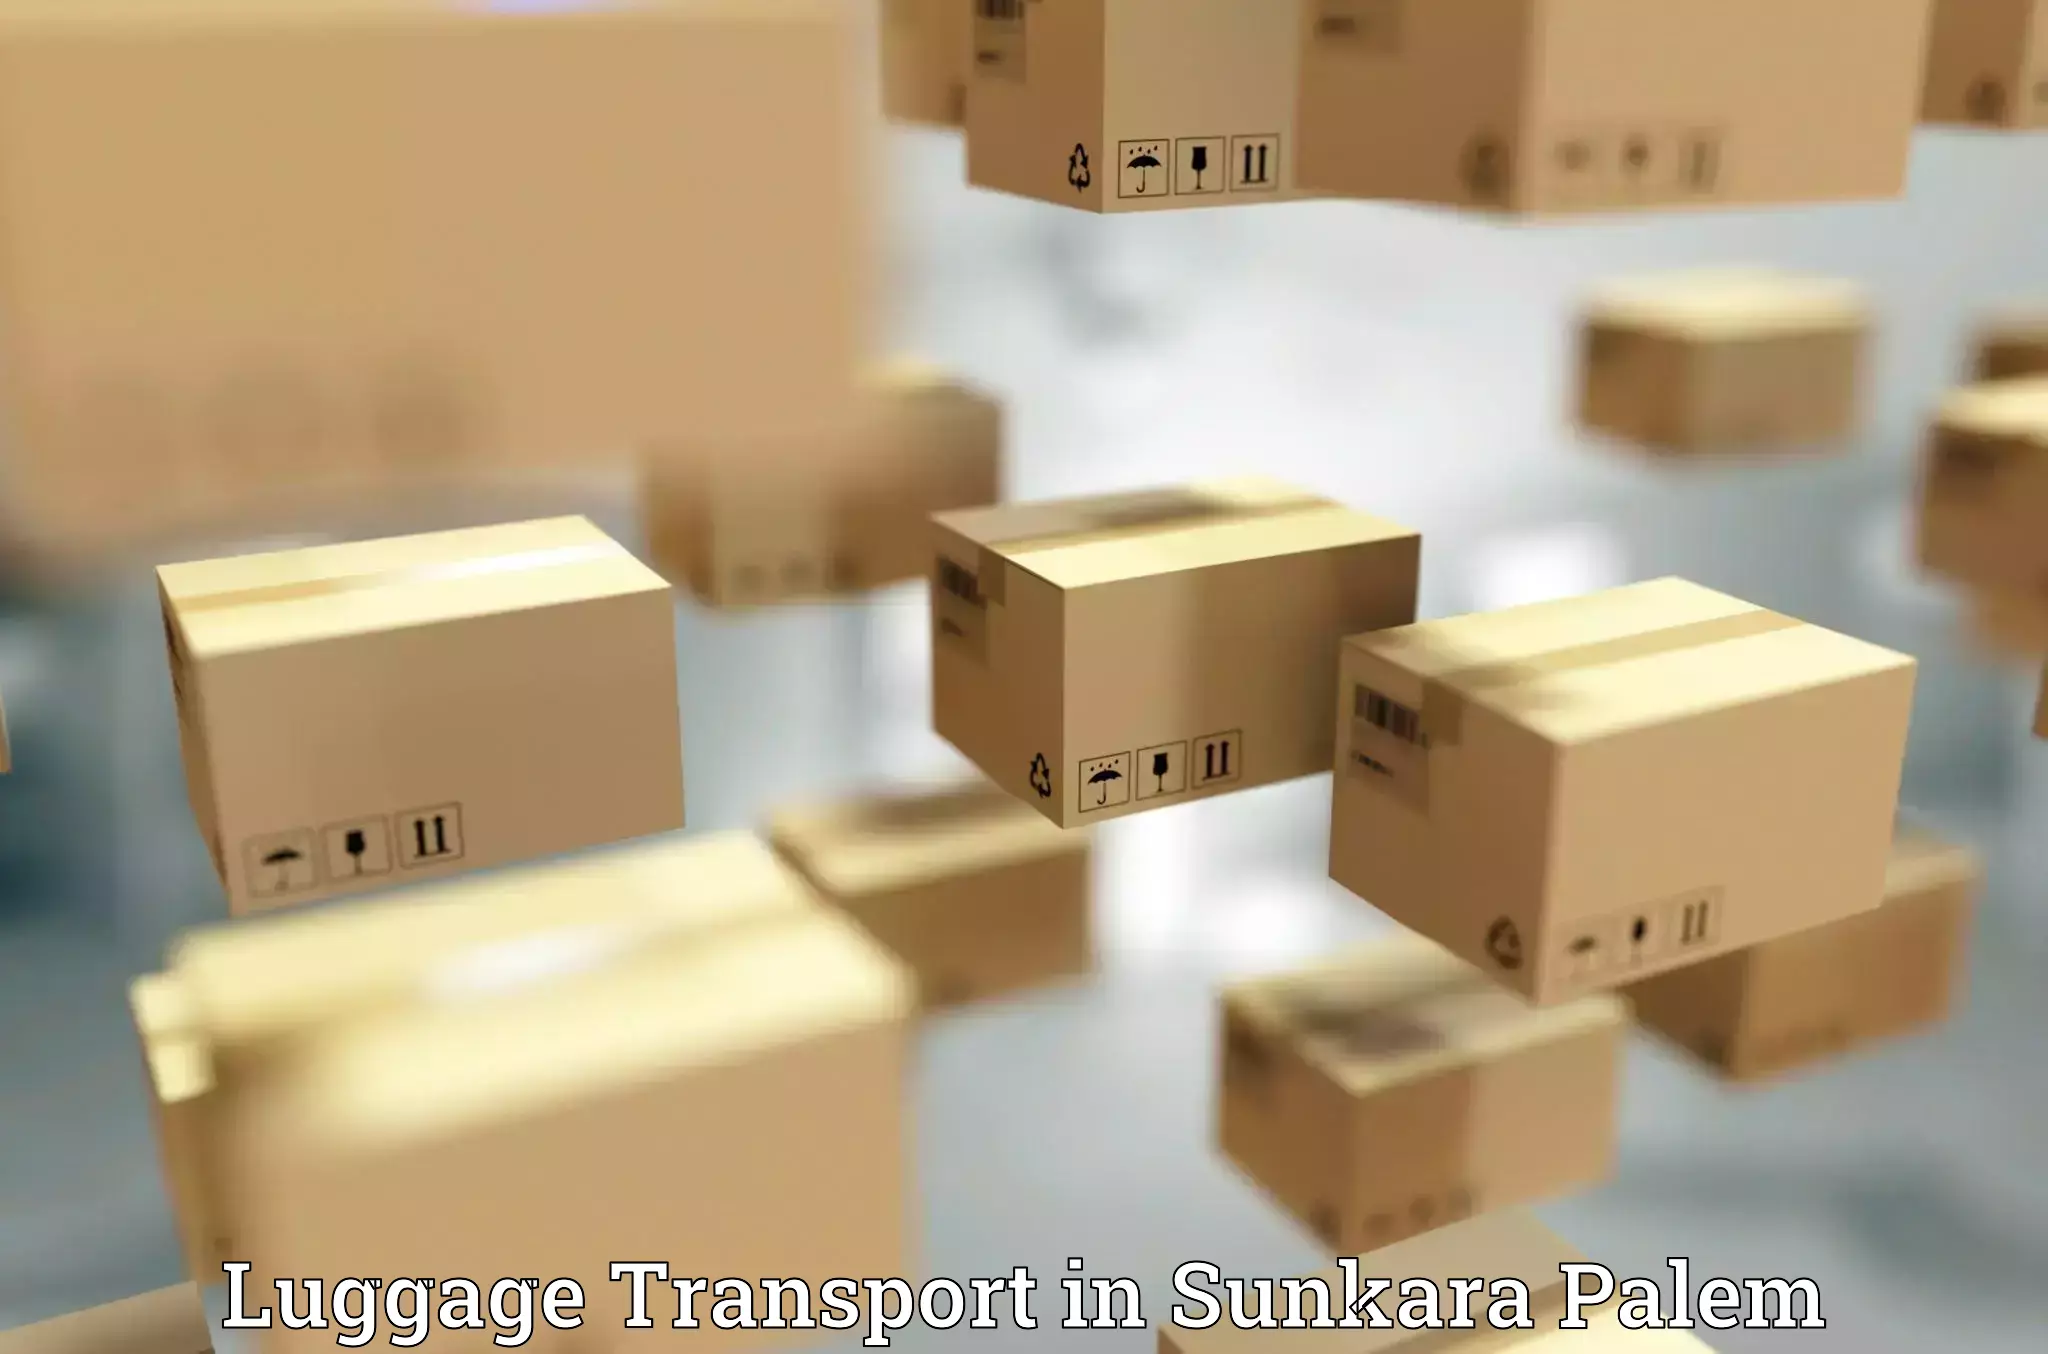 Urgent luggage shipment in Sunkara Palem